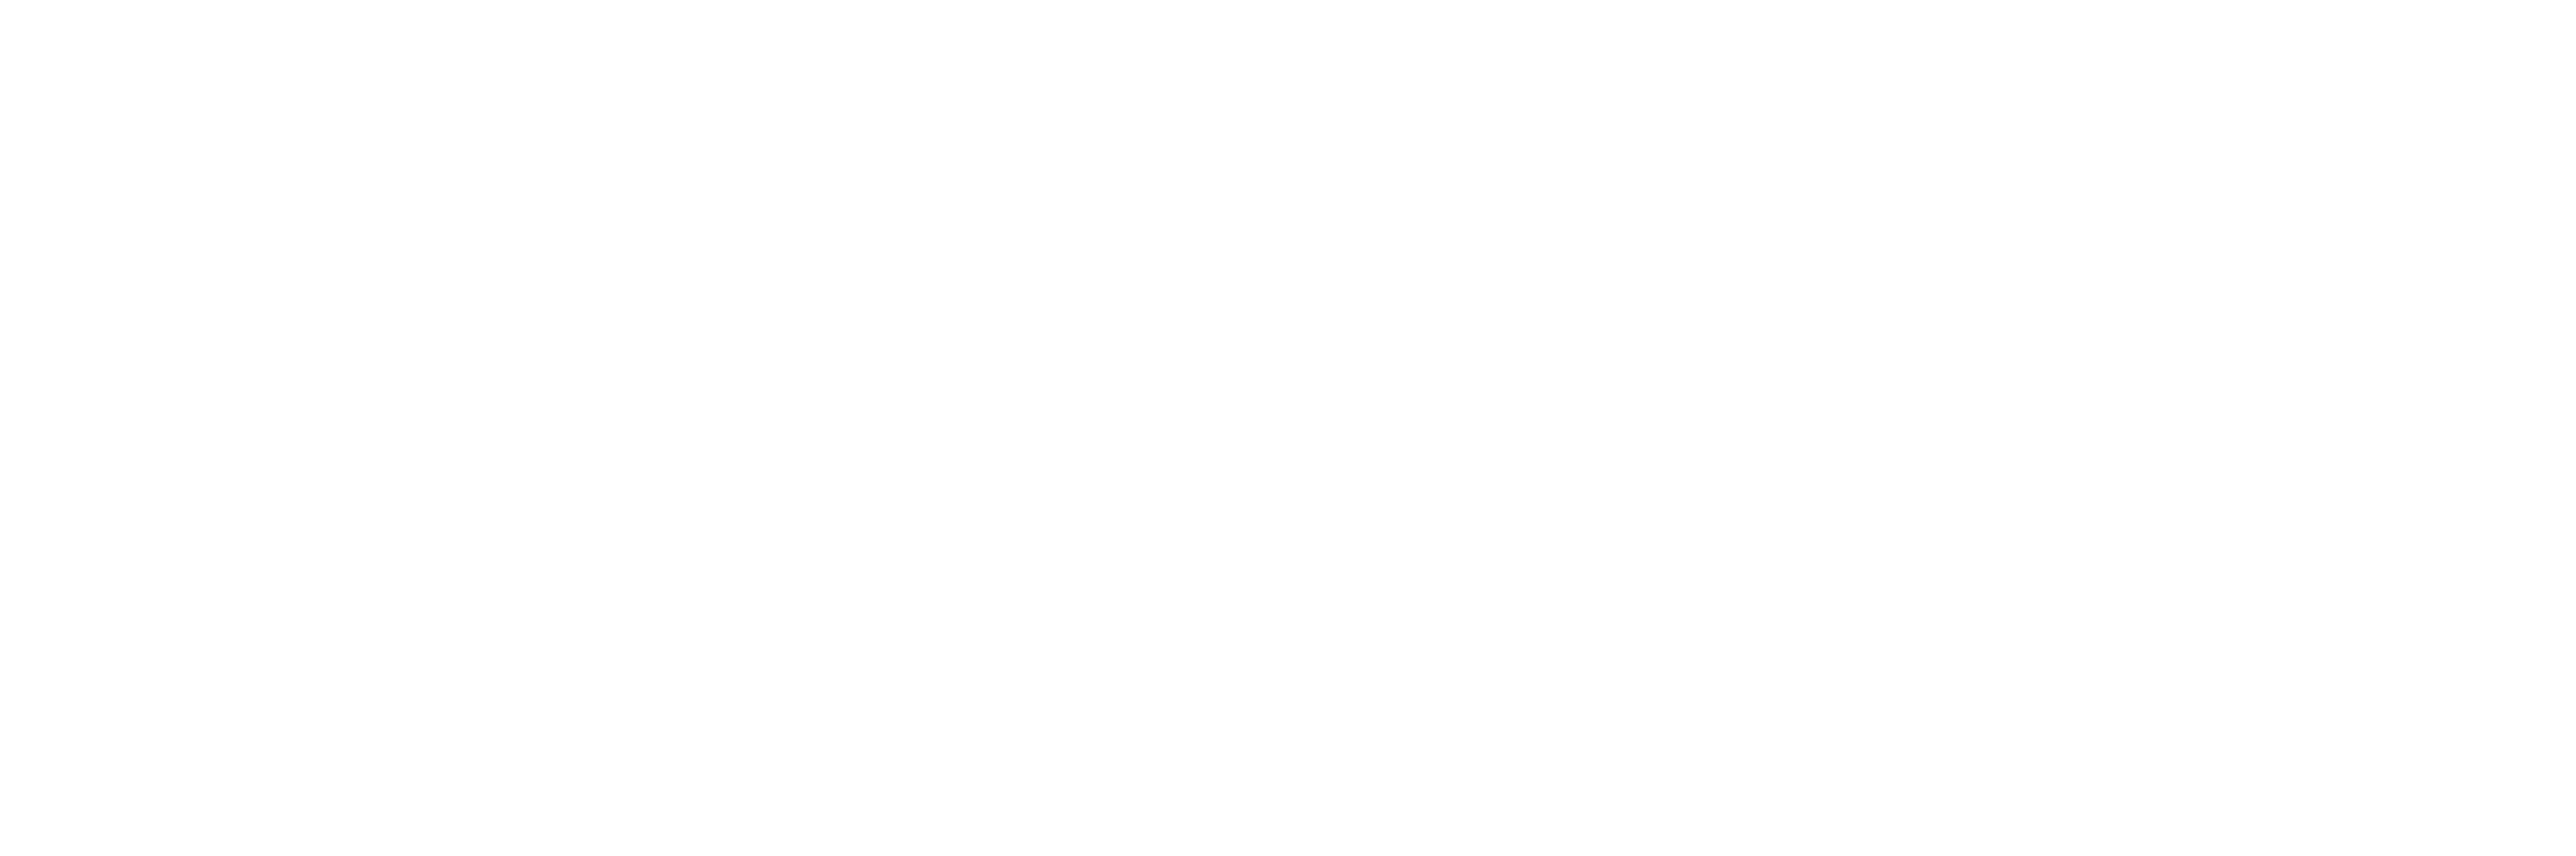 Benchmark-Litigation-logo-small